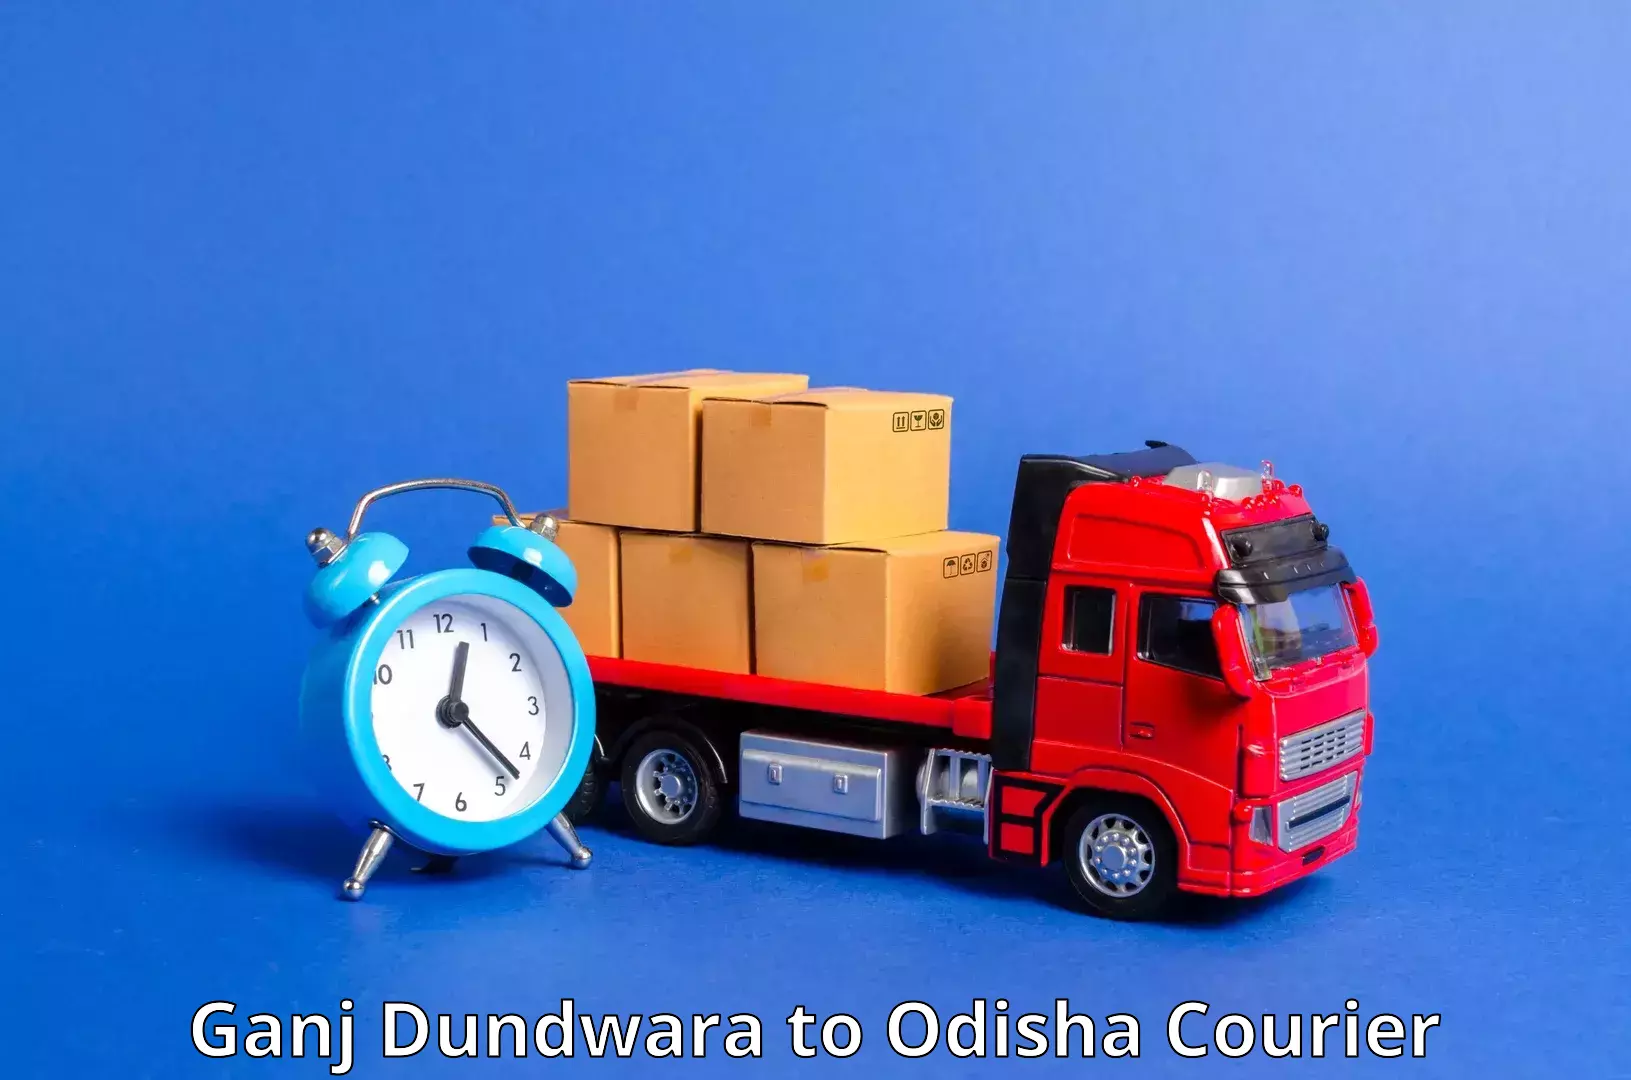 Doorstep delivery service Ganj Dundwara to Muribahal